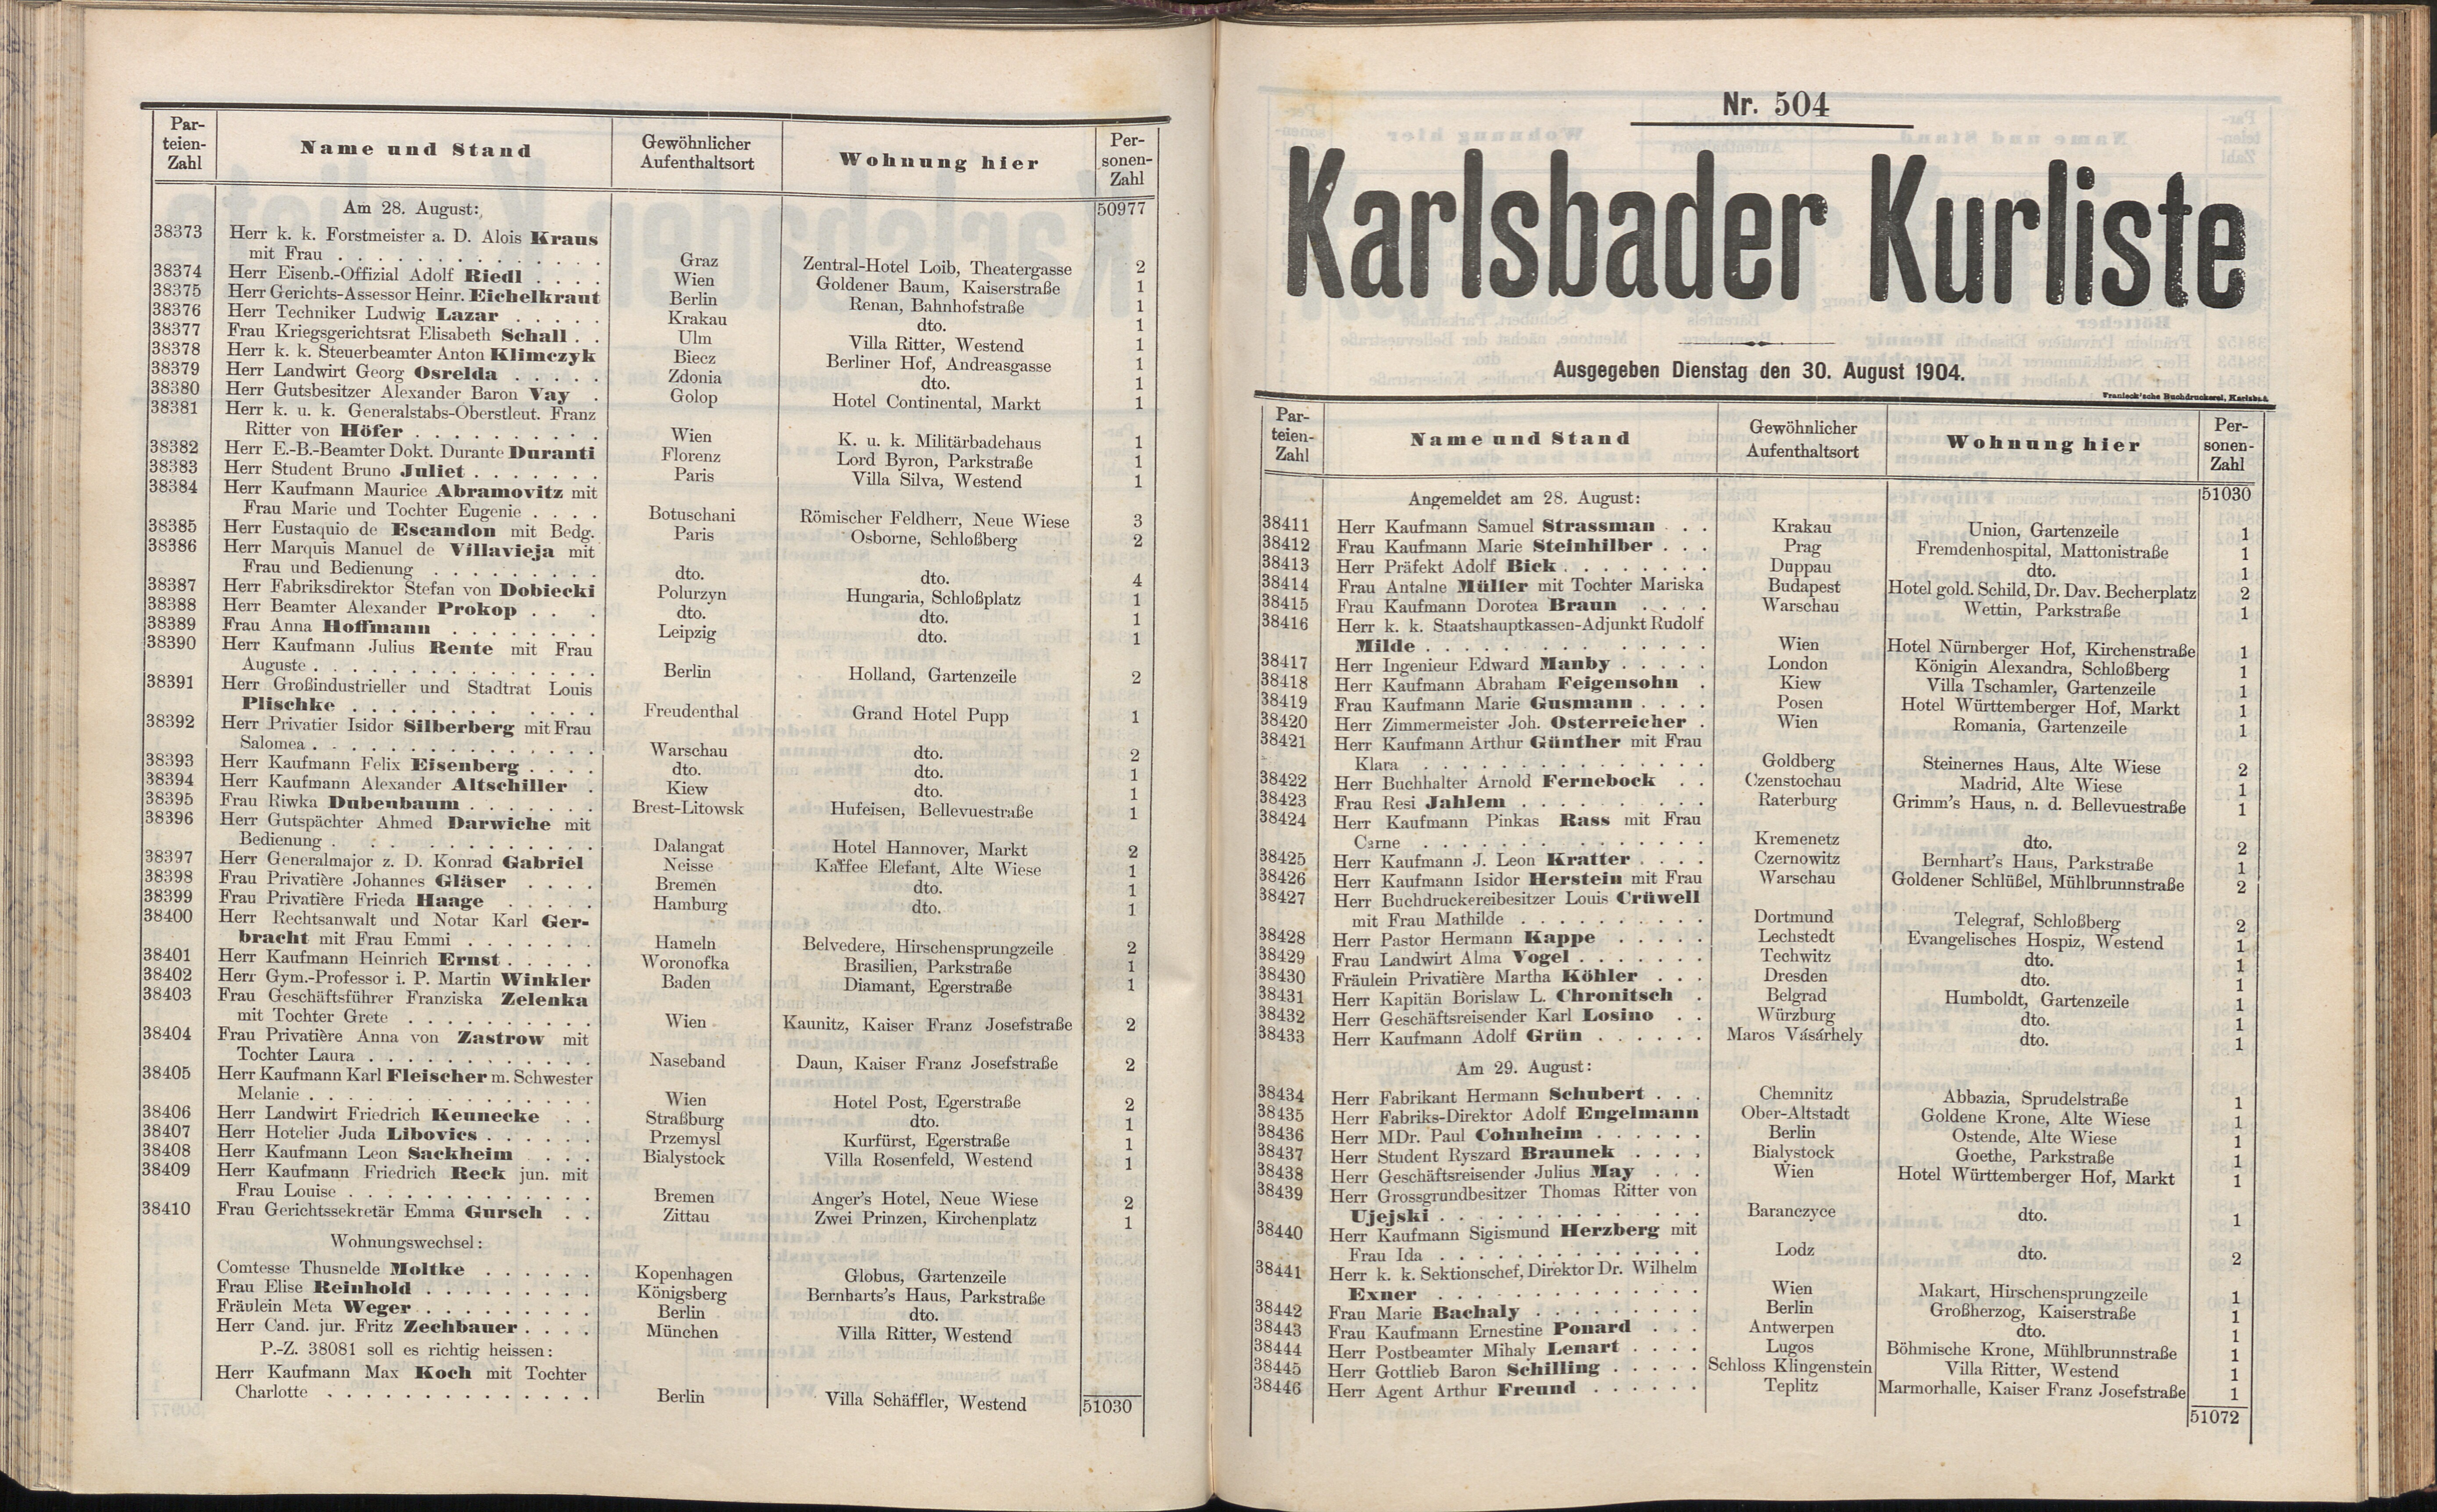 526. soap-kv_knihovna_karlsbader-kurliste-1904_5270